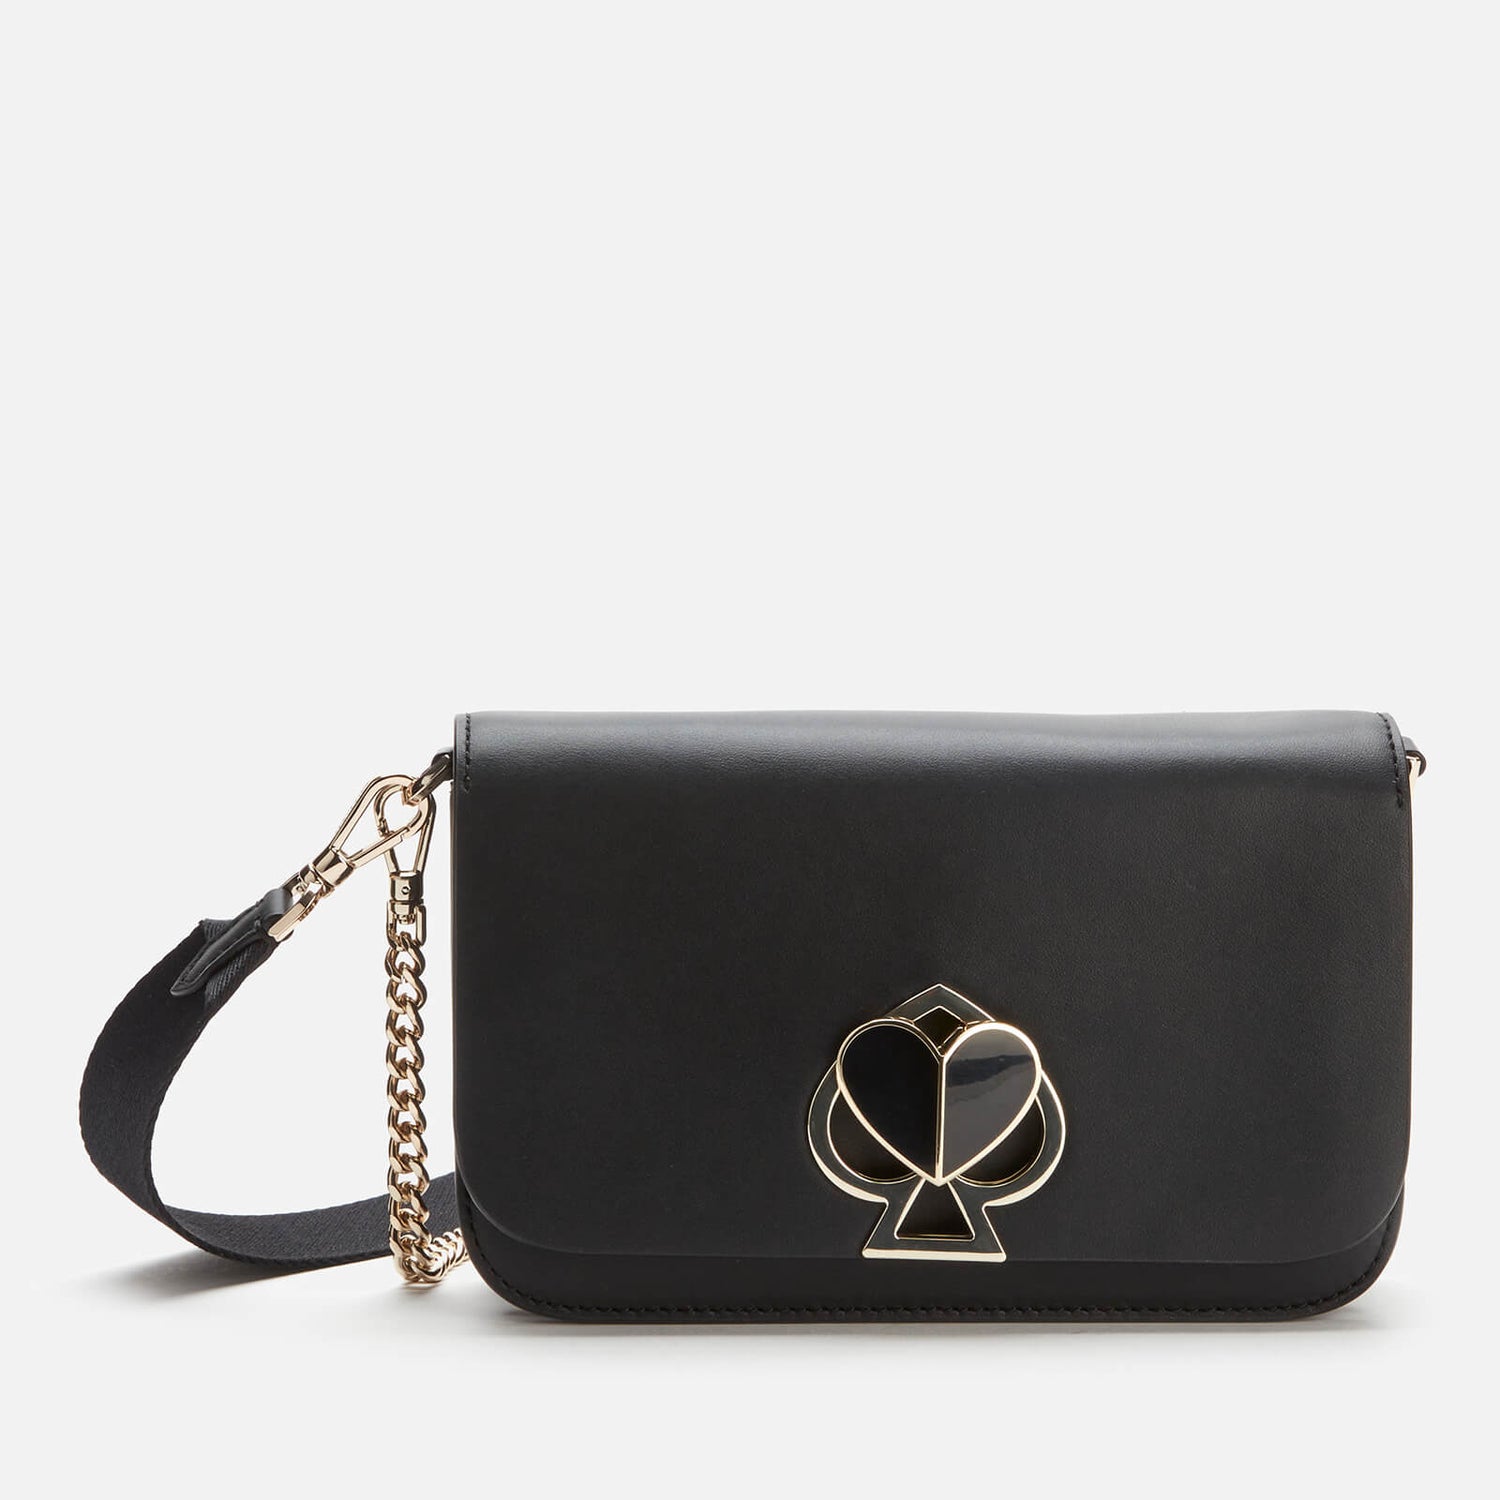 Kate Spade New York Women'S Nicola Twistlock Small Top Handle Bag